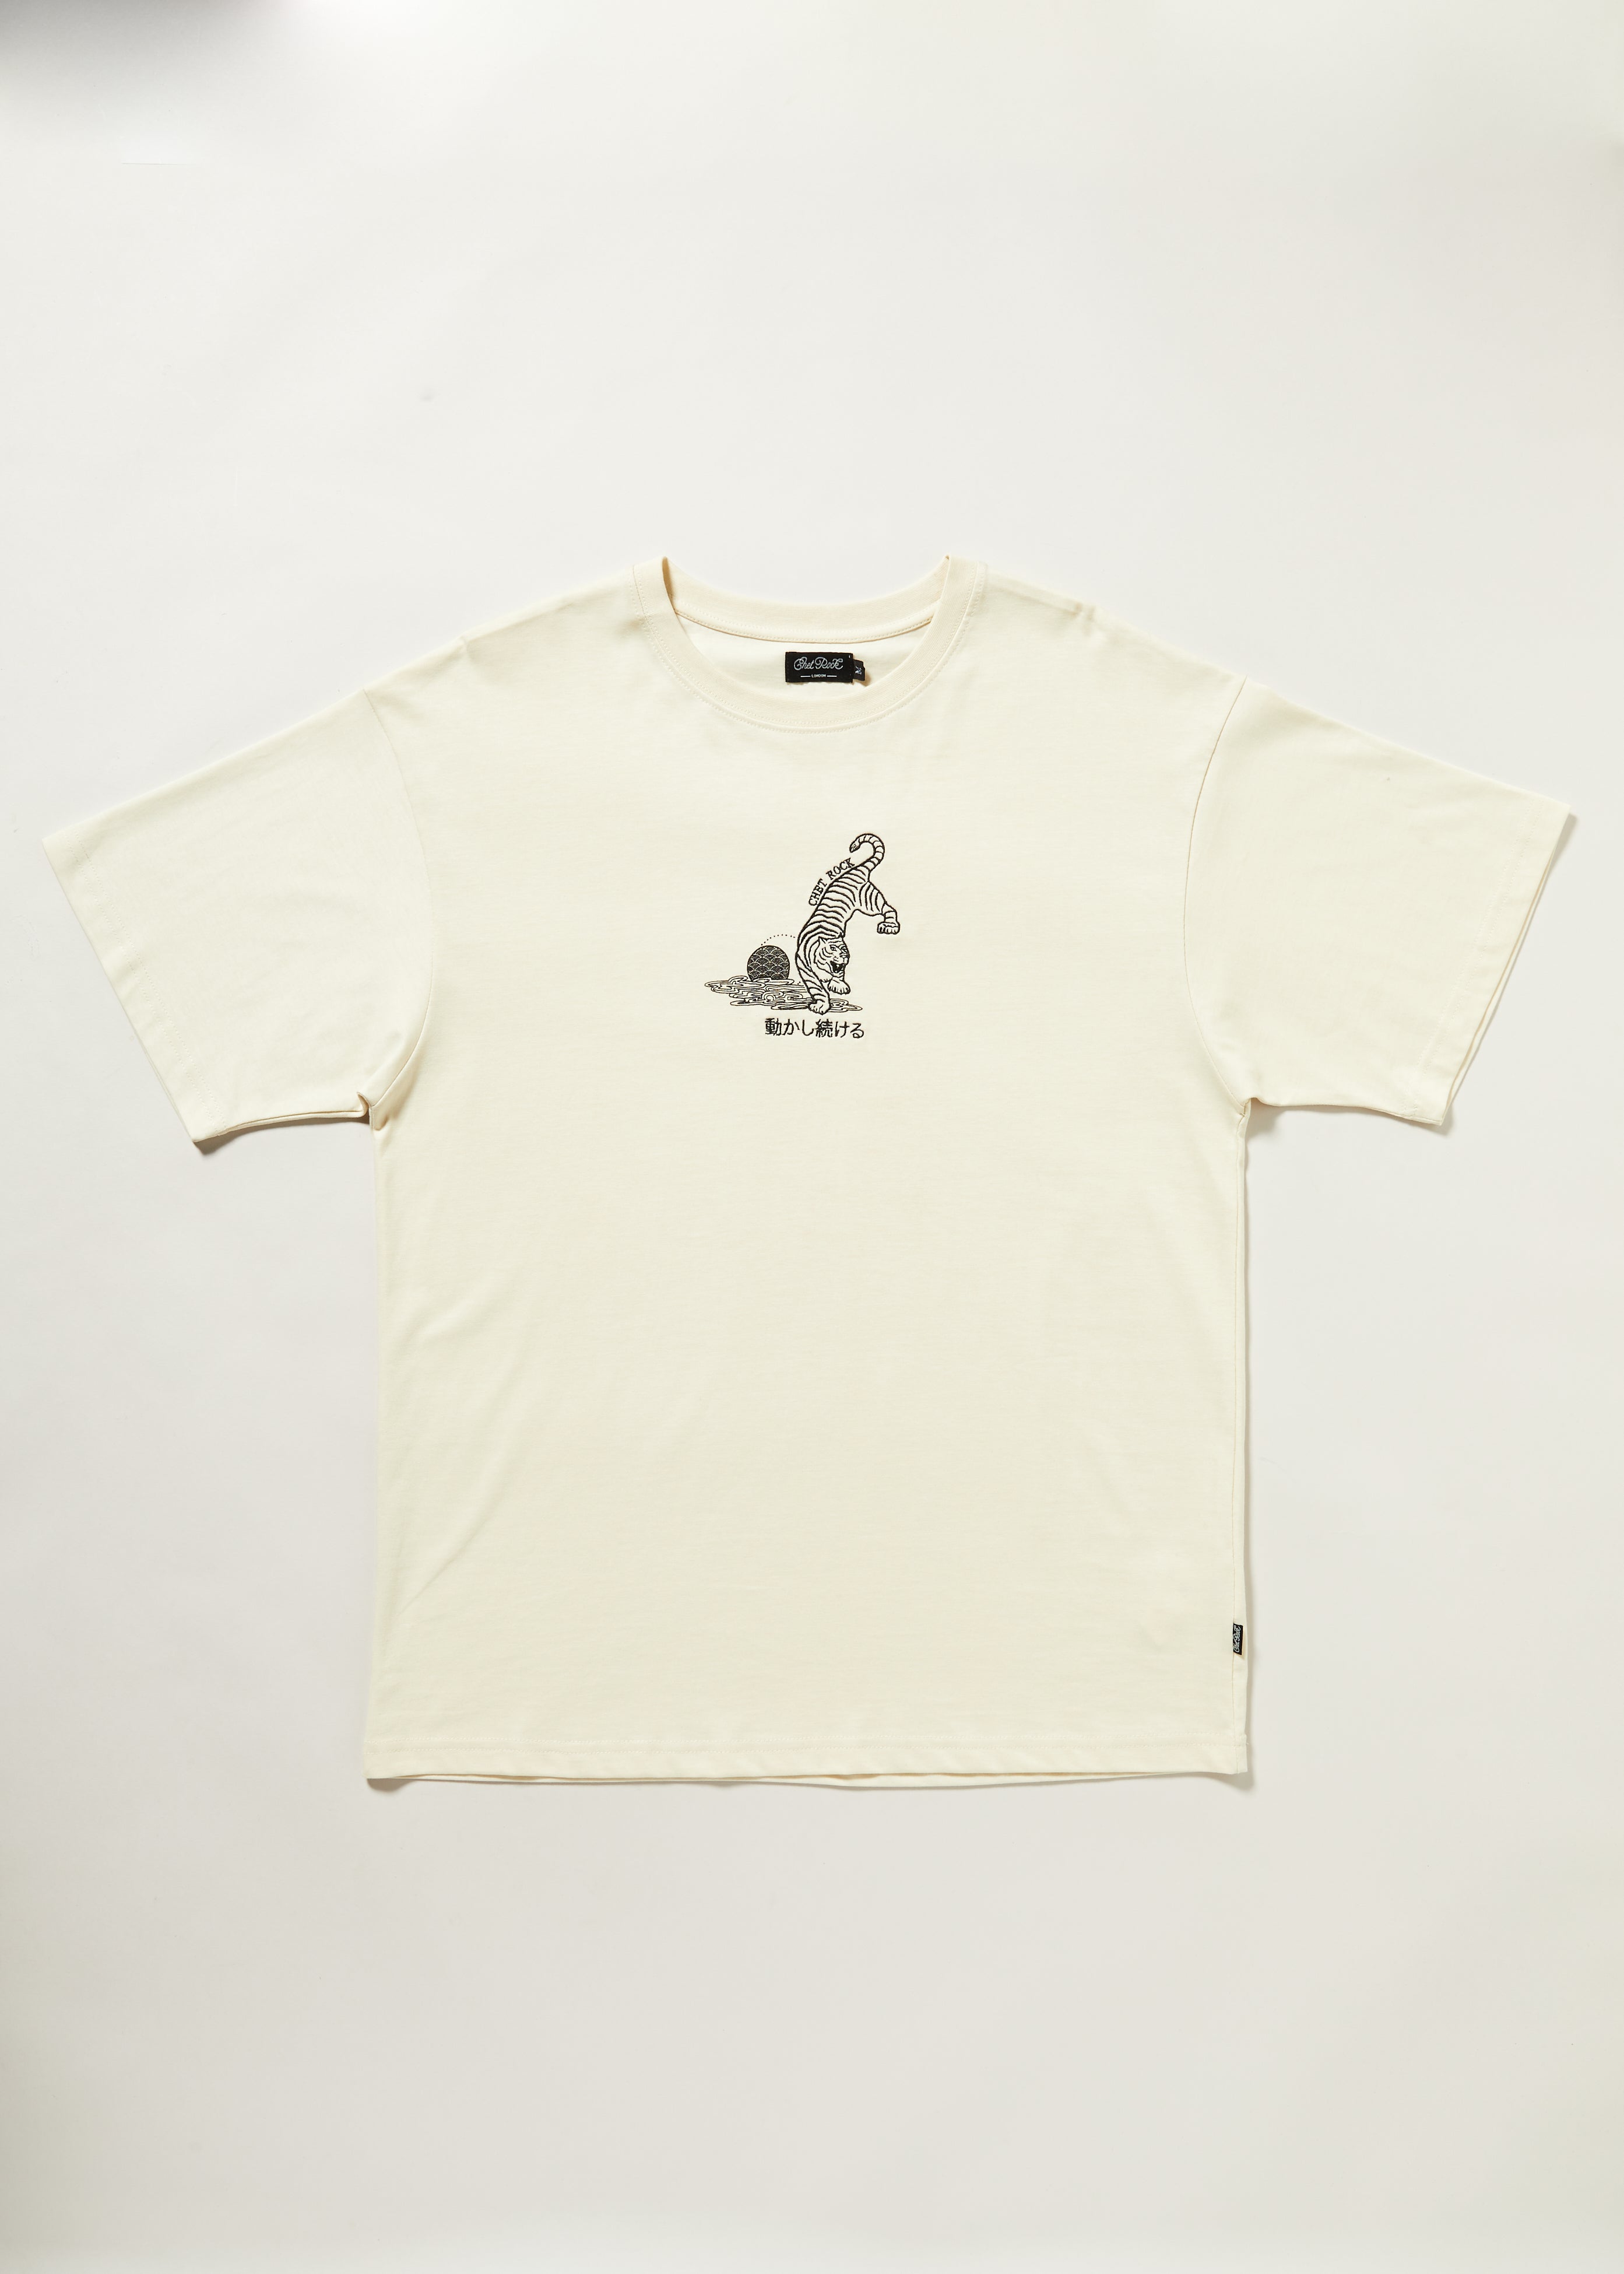 Crouching Tiger T-Shirt